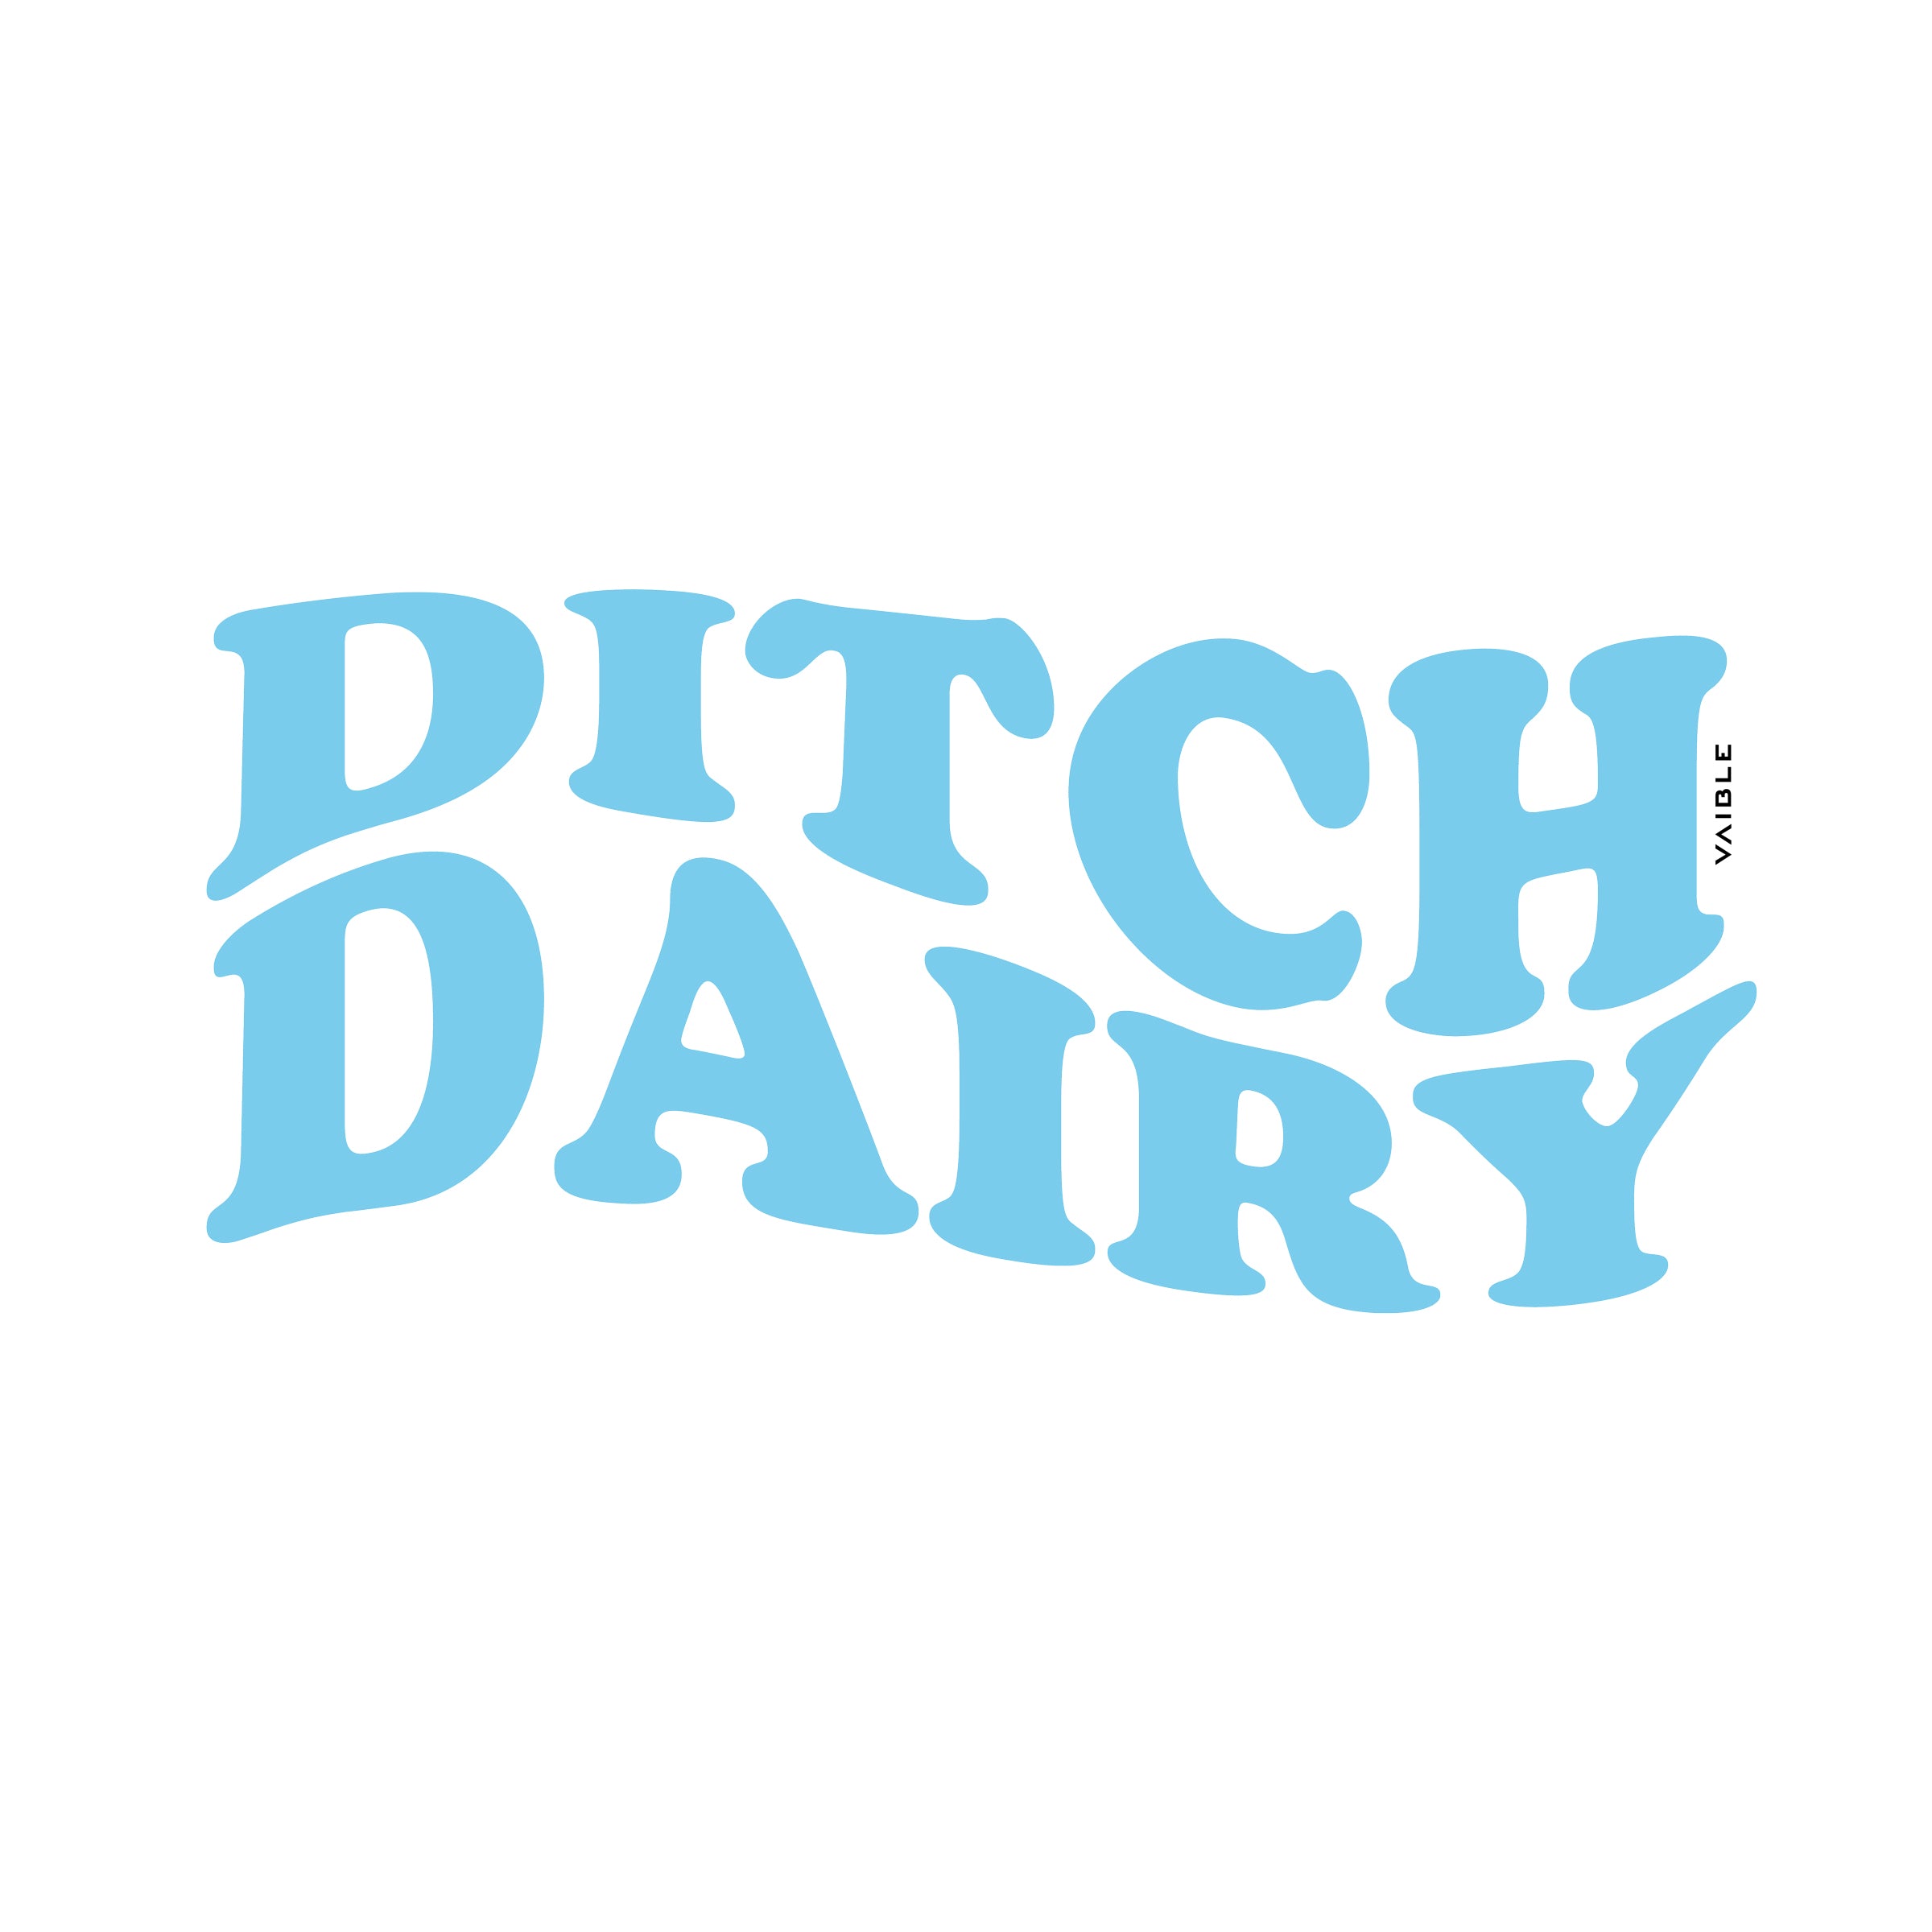 ditch dairy vegan  - Unisex Organic Sweatshirt